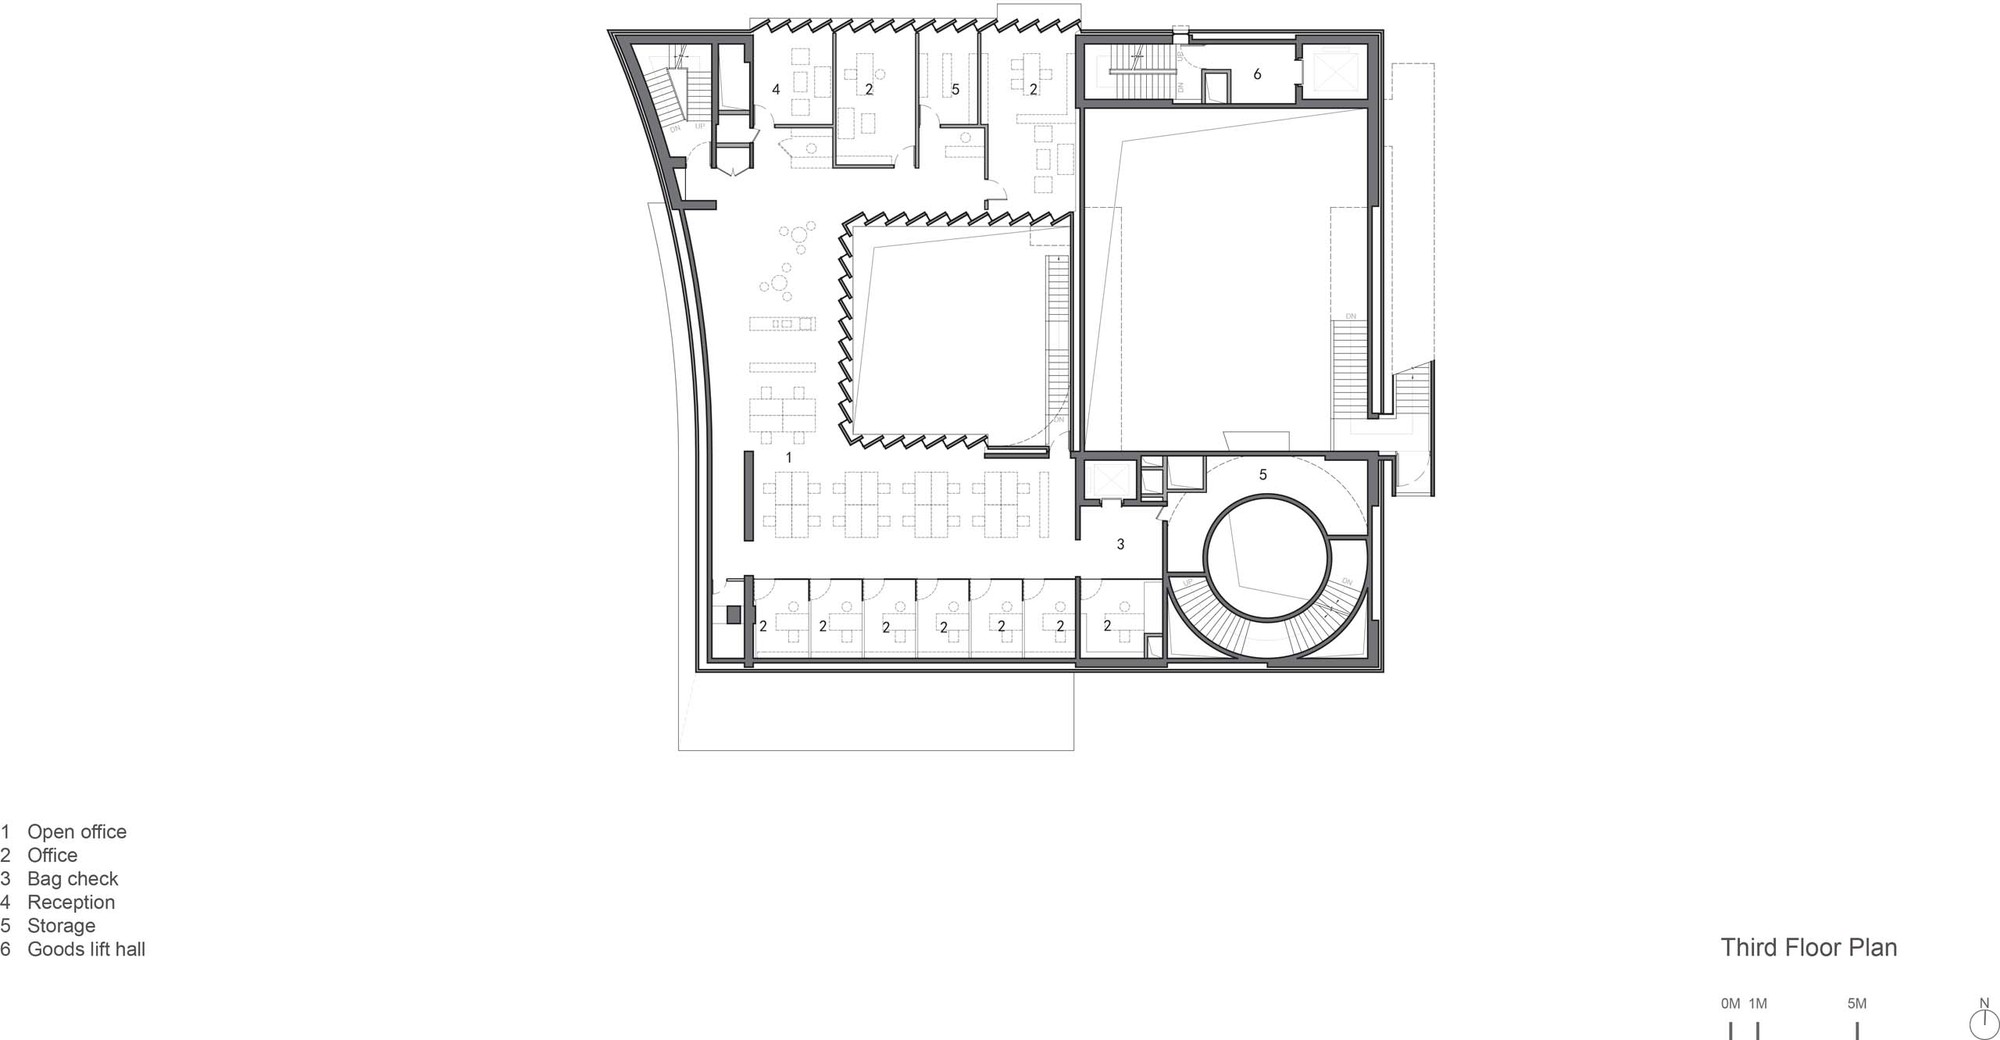 46_Third_Floor_Plan.jpg